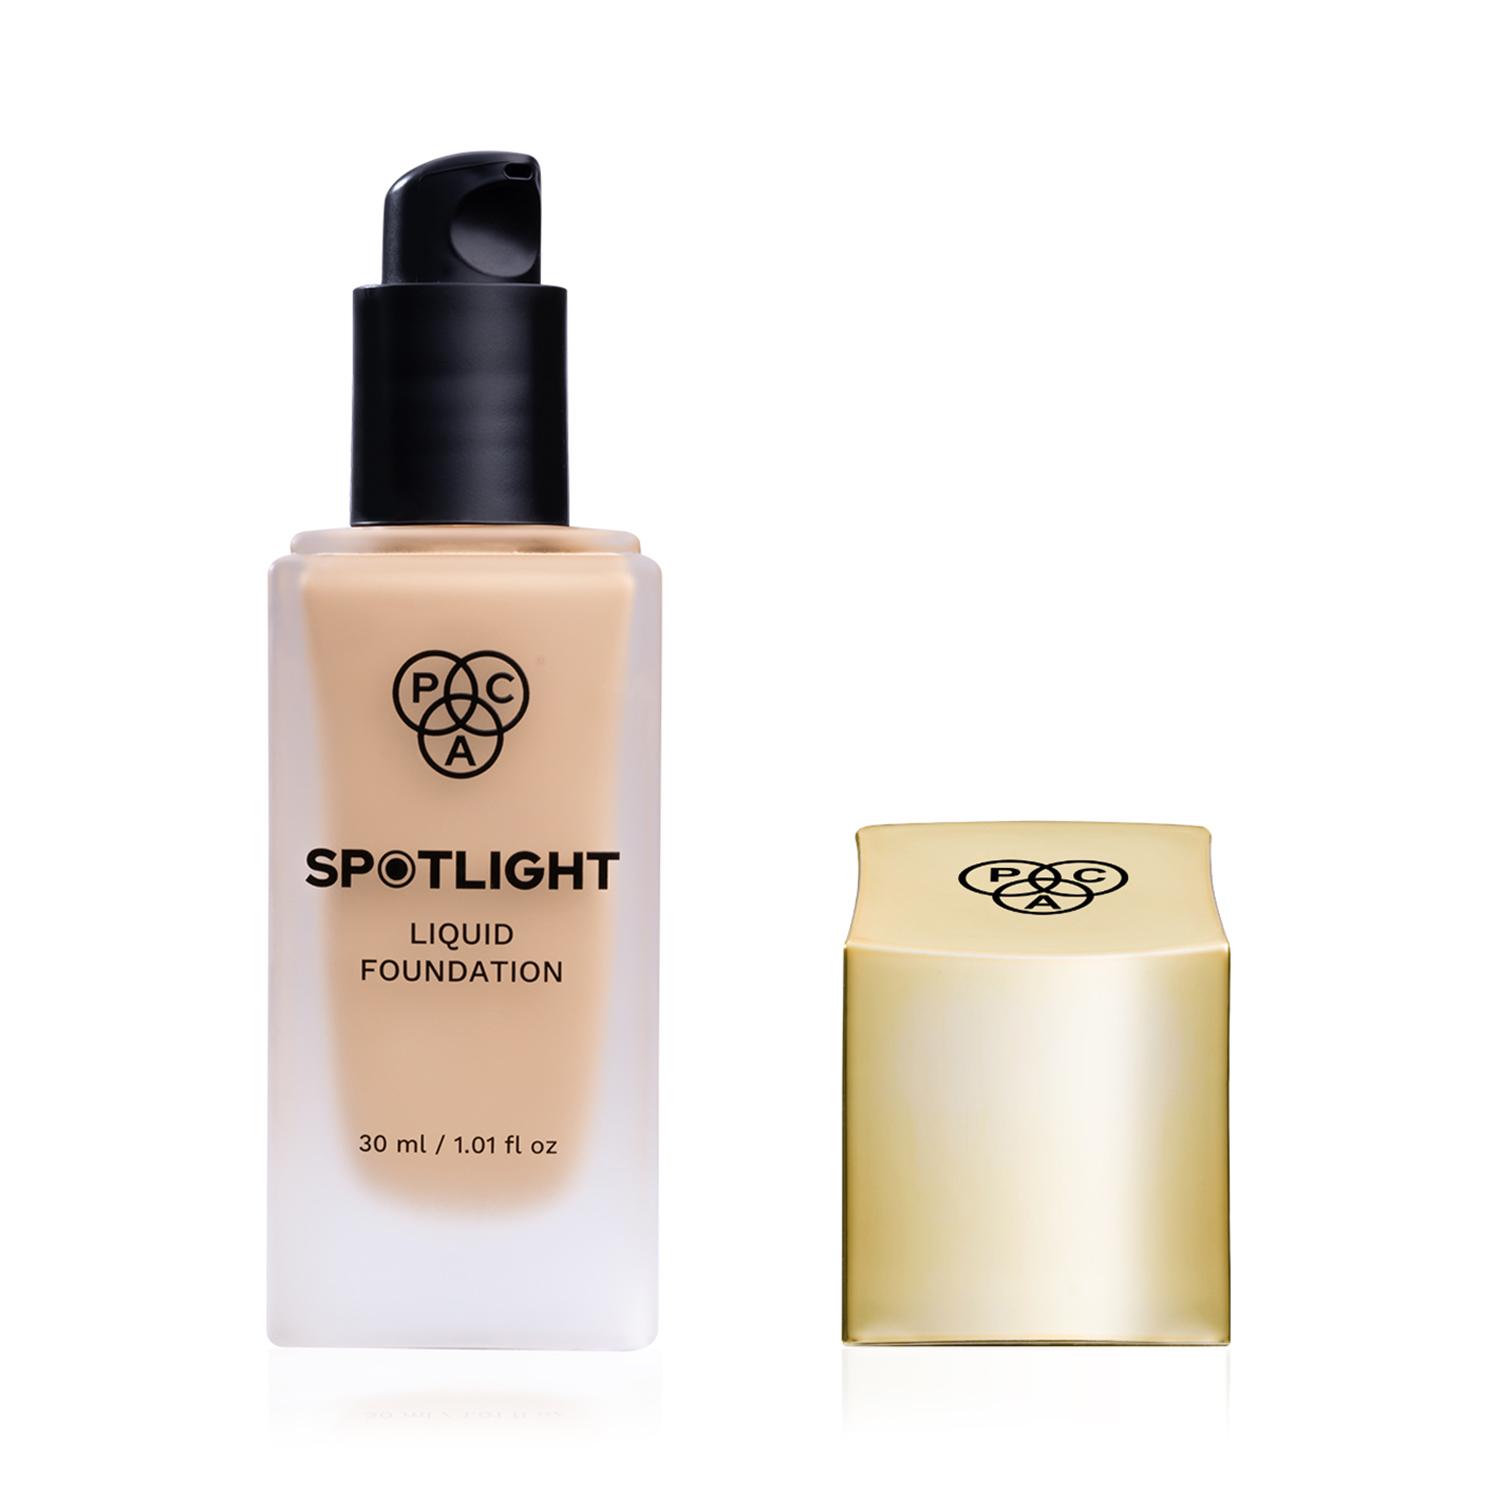 PAC | PAC Spotlight Liquid Foundation - 05 Whipped Delight (30 ml)